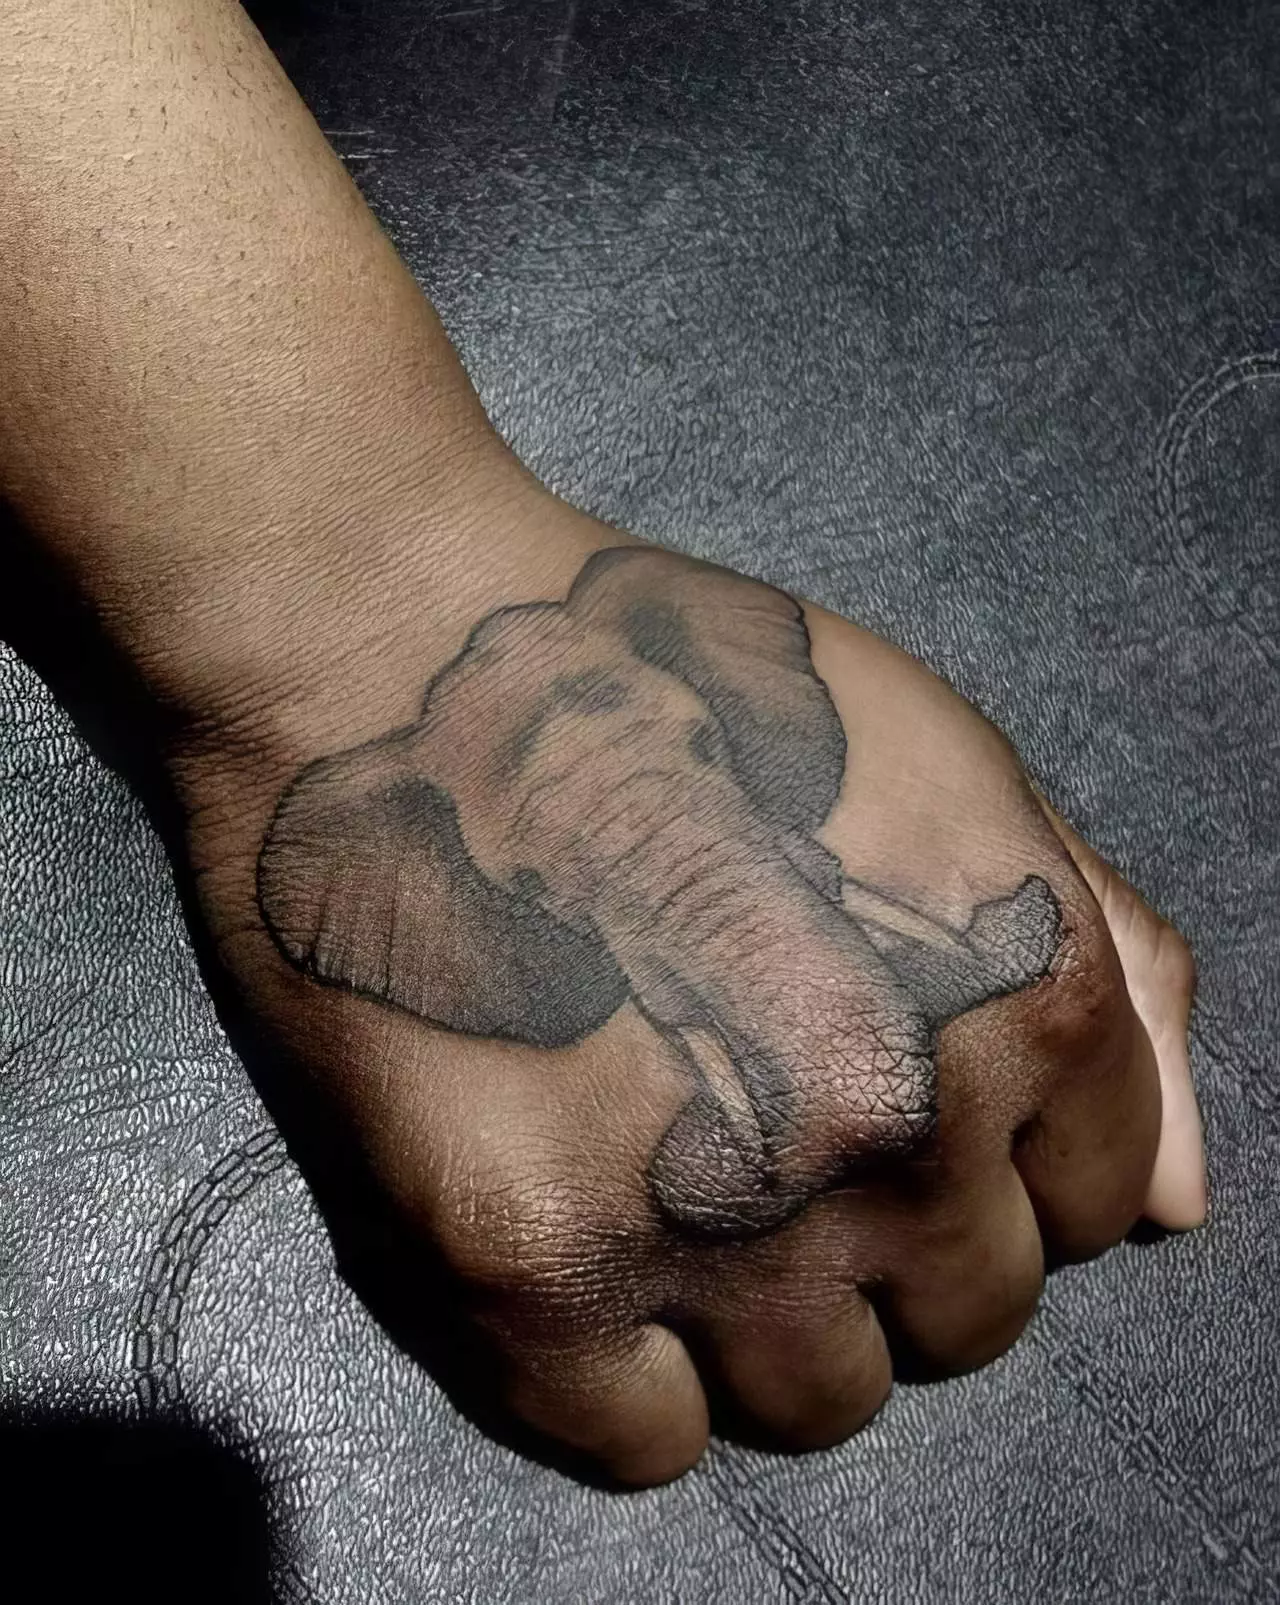 elephant tattoo for men 4 2